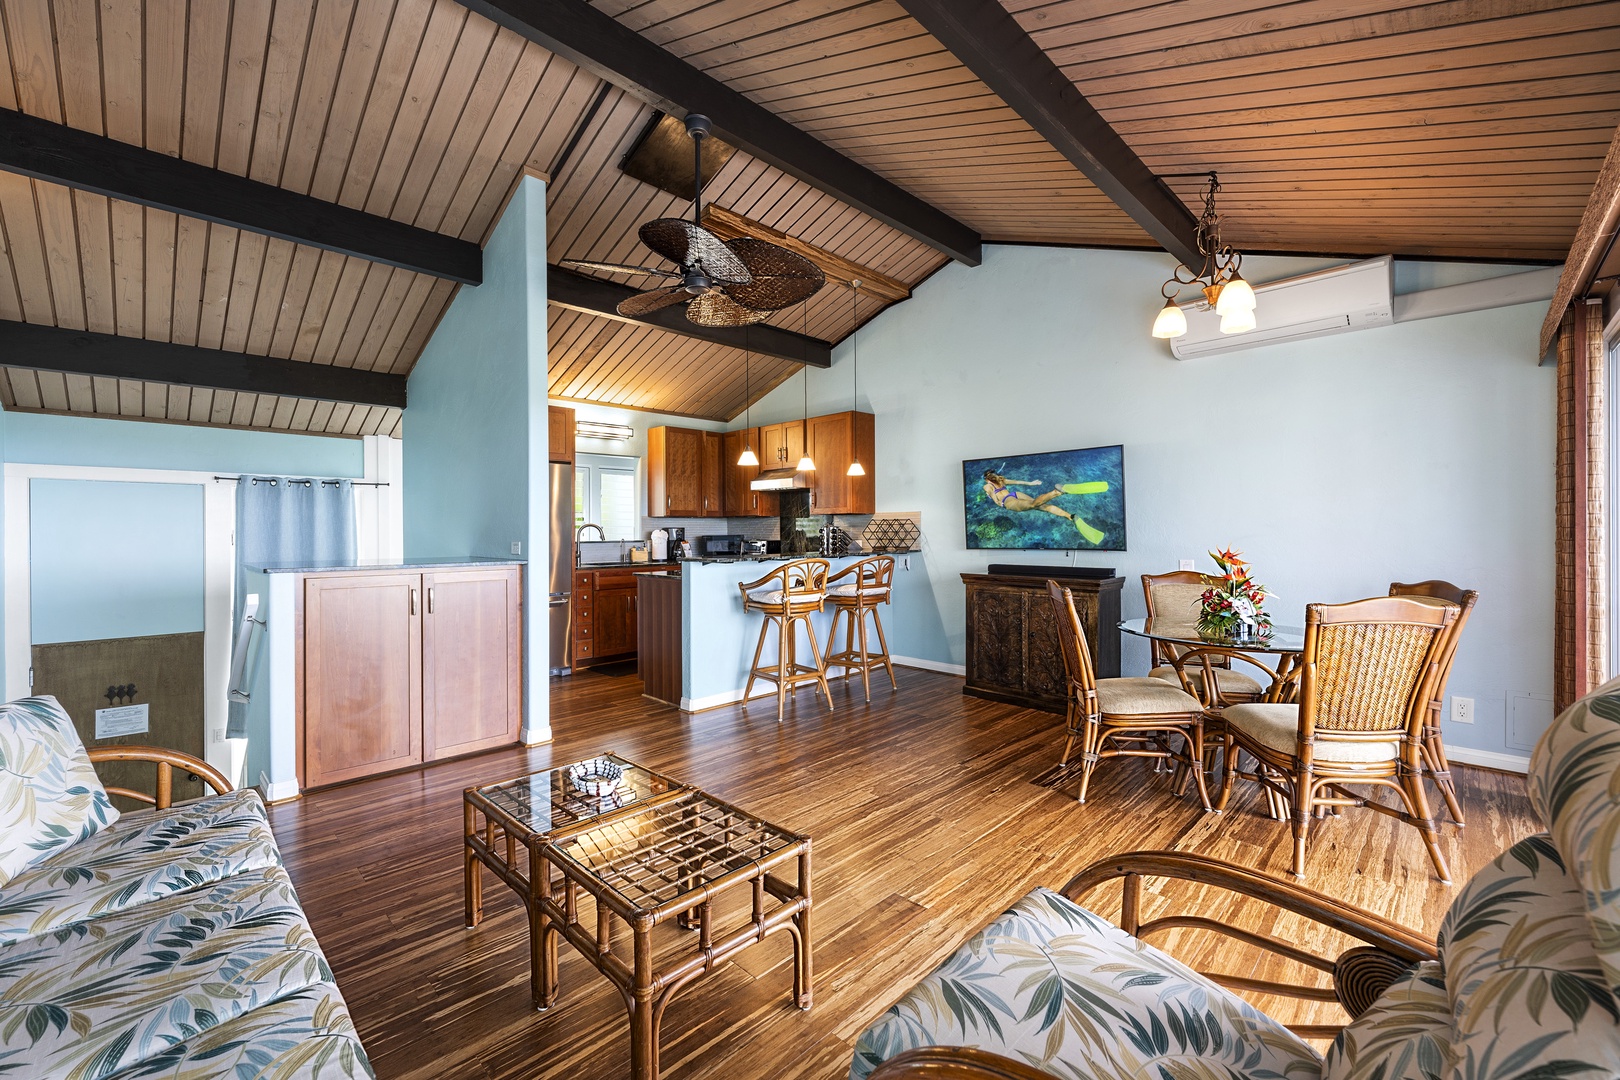 Kailua-Kona Vacation Rentals, Keauhou Resort 116 - Spacious open floor plan with vaulted ceilings